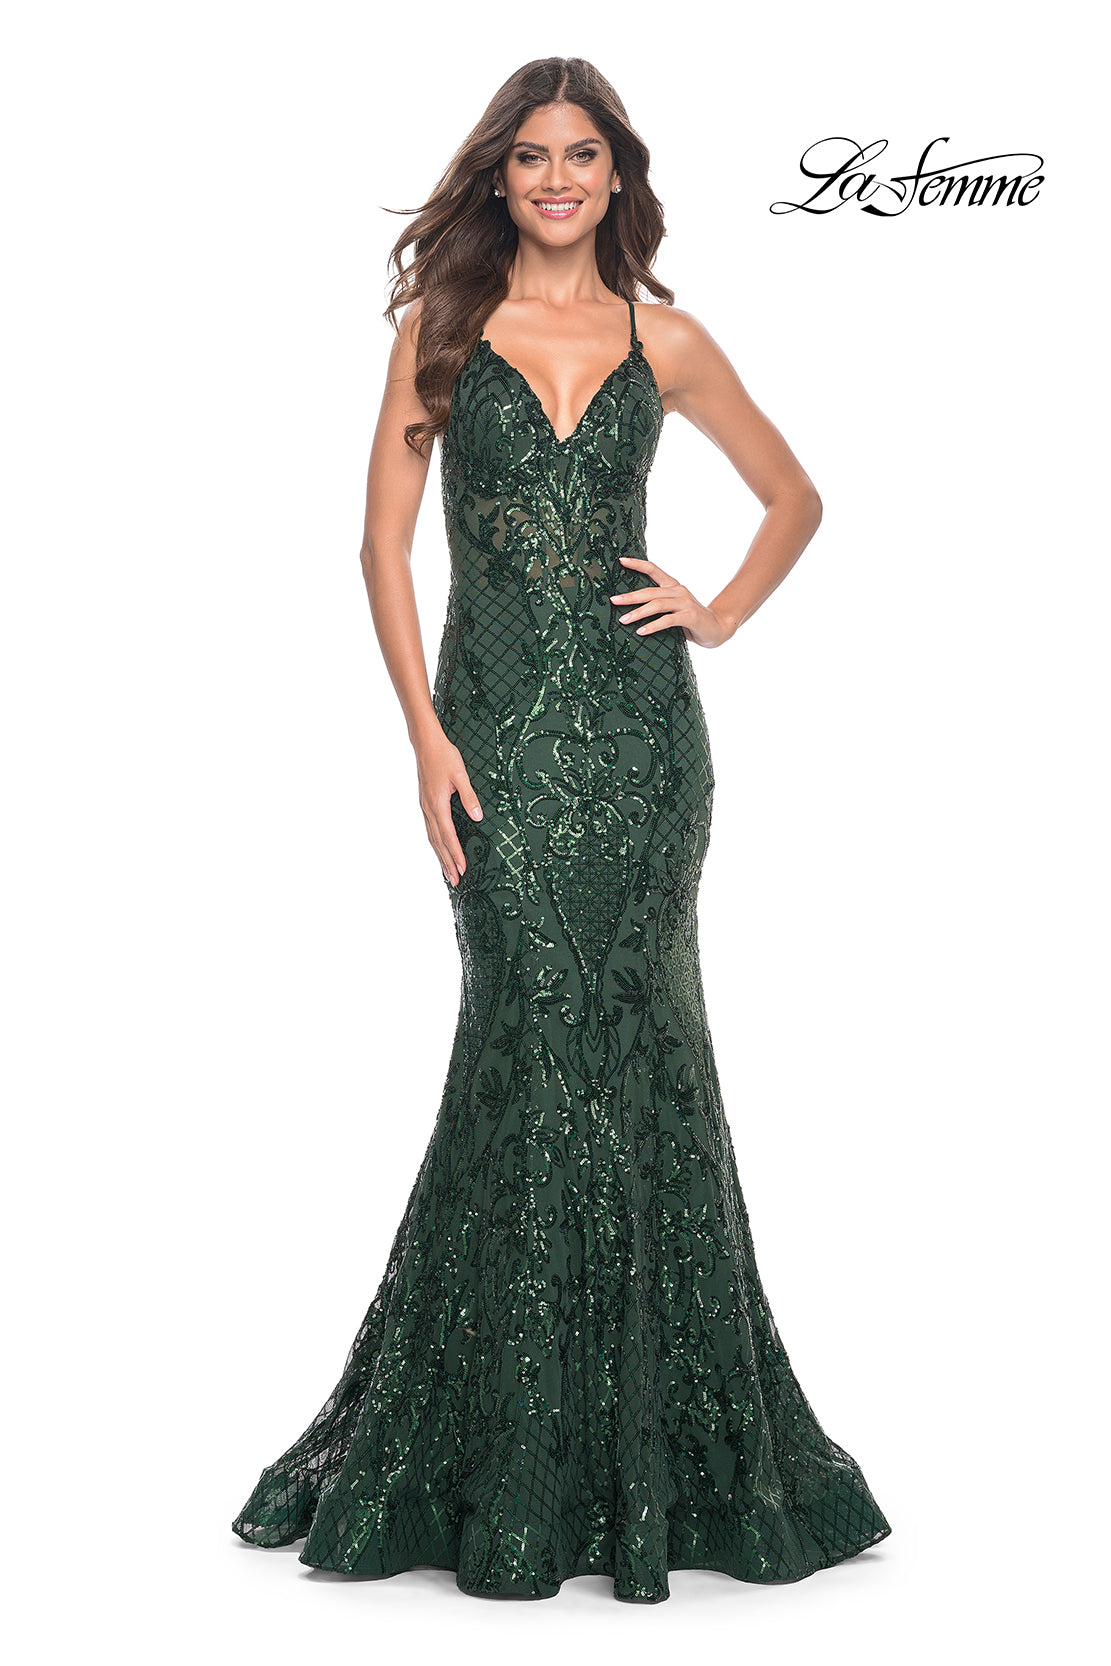 La-Femme-31943-V-Neck-Neckline-Low-Back-Corset-Print-Sequin-Mermaid-Dark-Emerald-Evening-Dress-B-Chic-Fashions-Prom-Dress